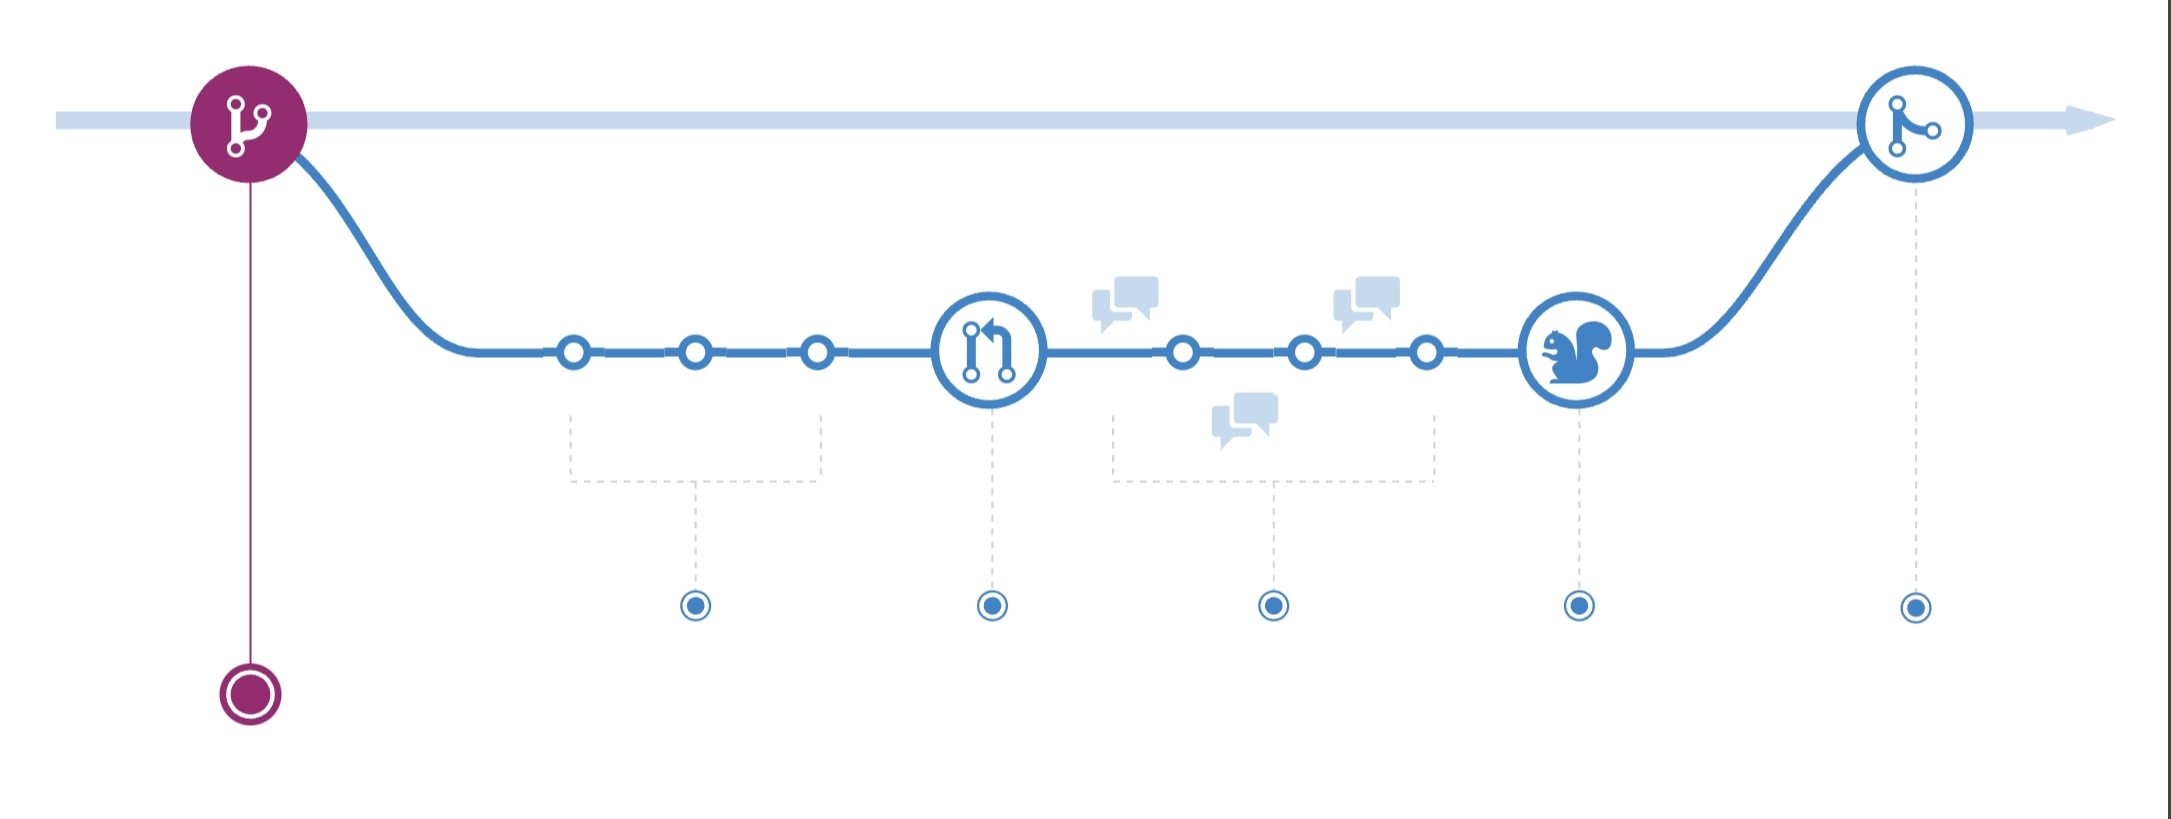 GitHub flow diagram representing the steps taken